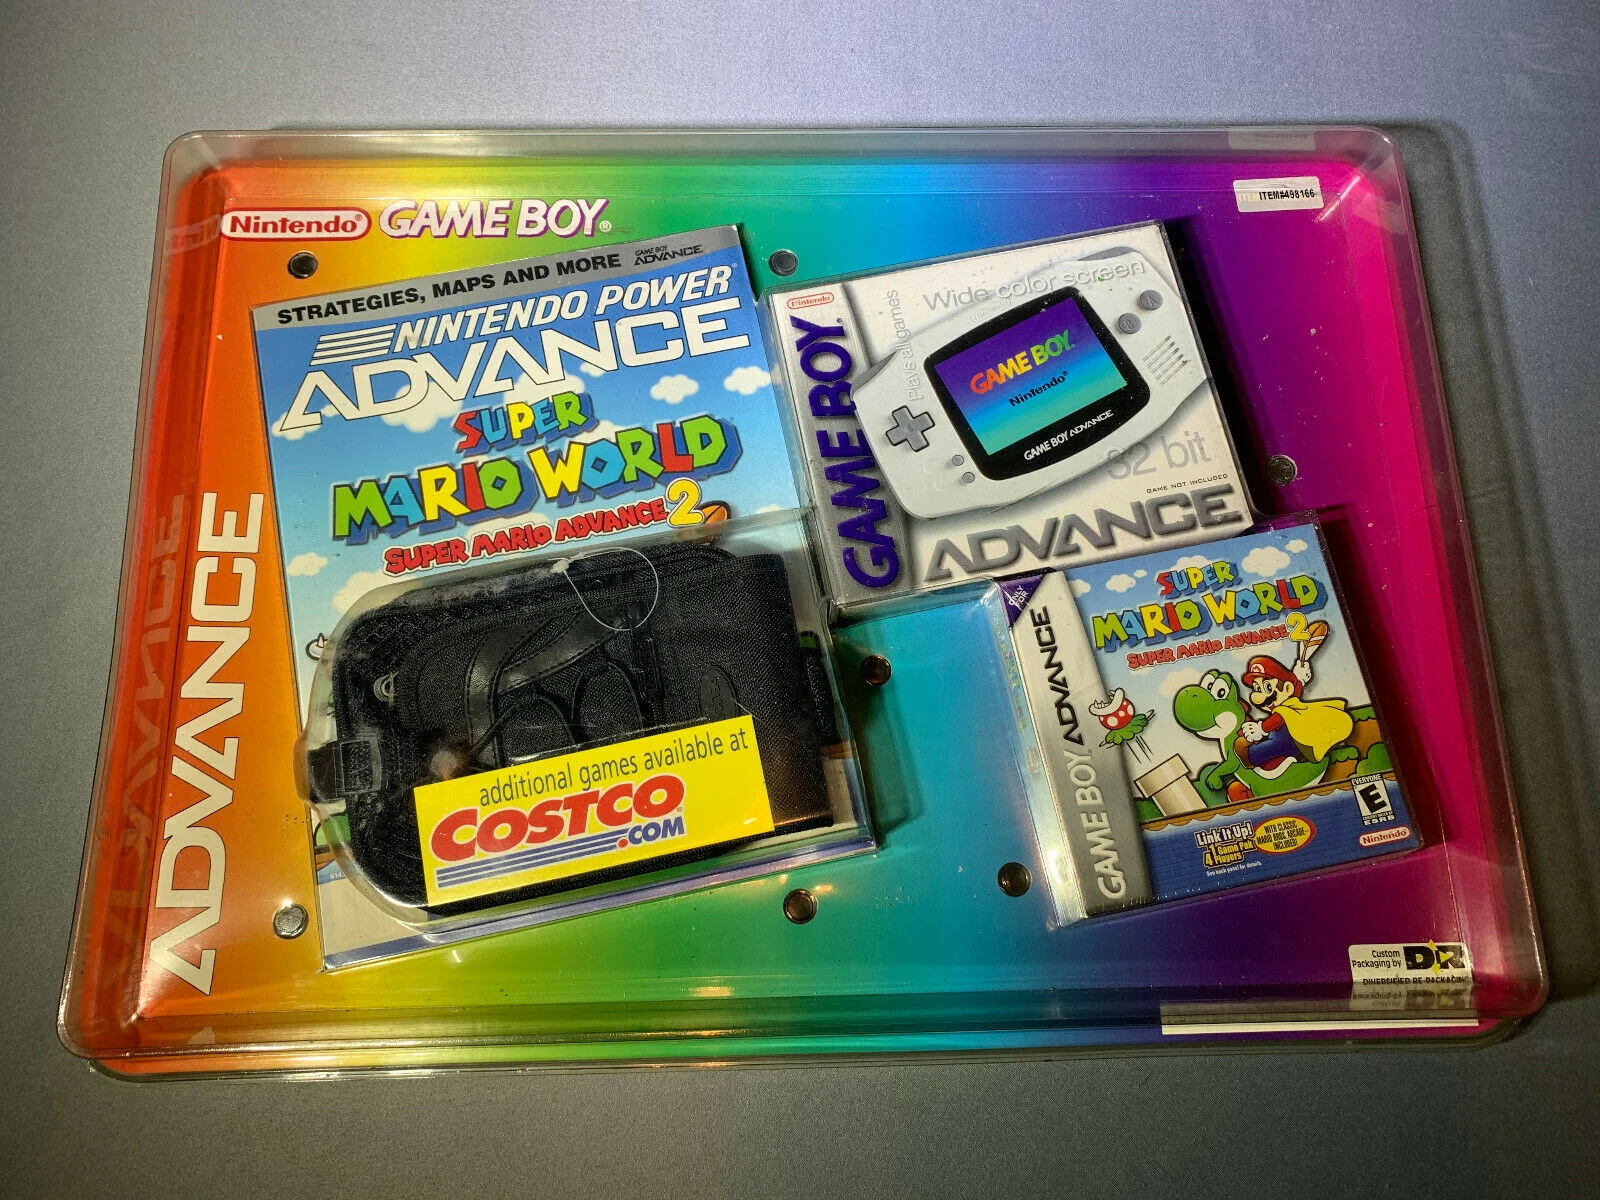  Nintendo Game Boy Advance Costco Bundle